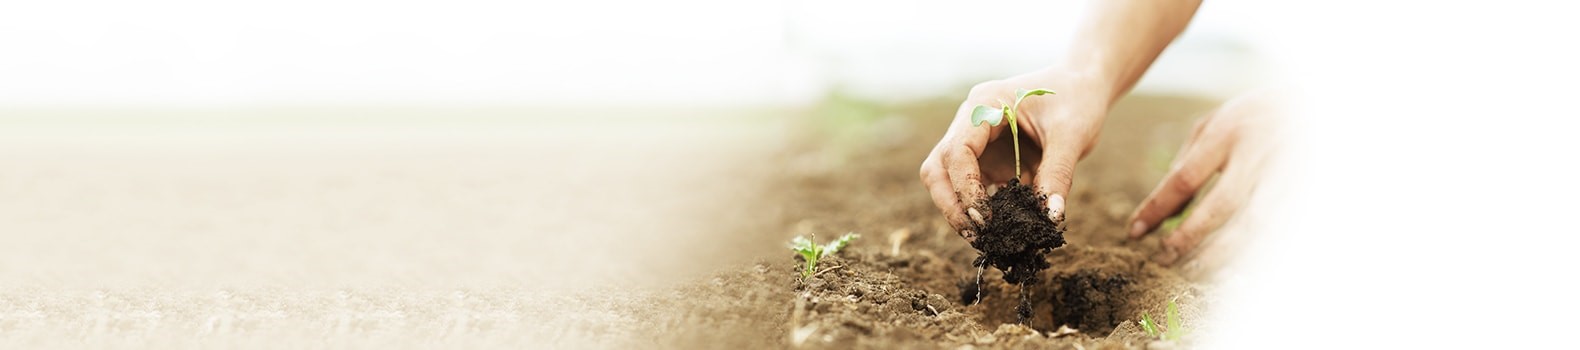 a hand planting sapling into soil